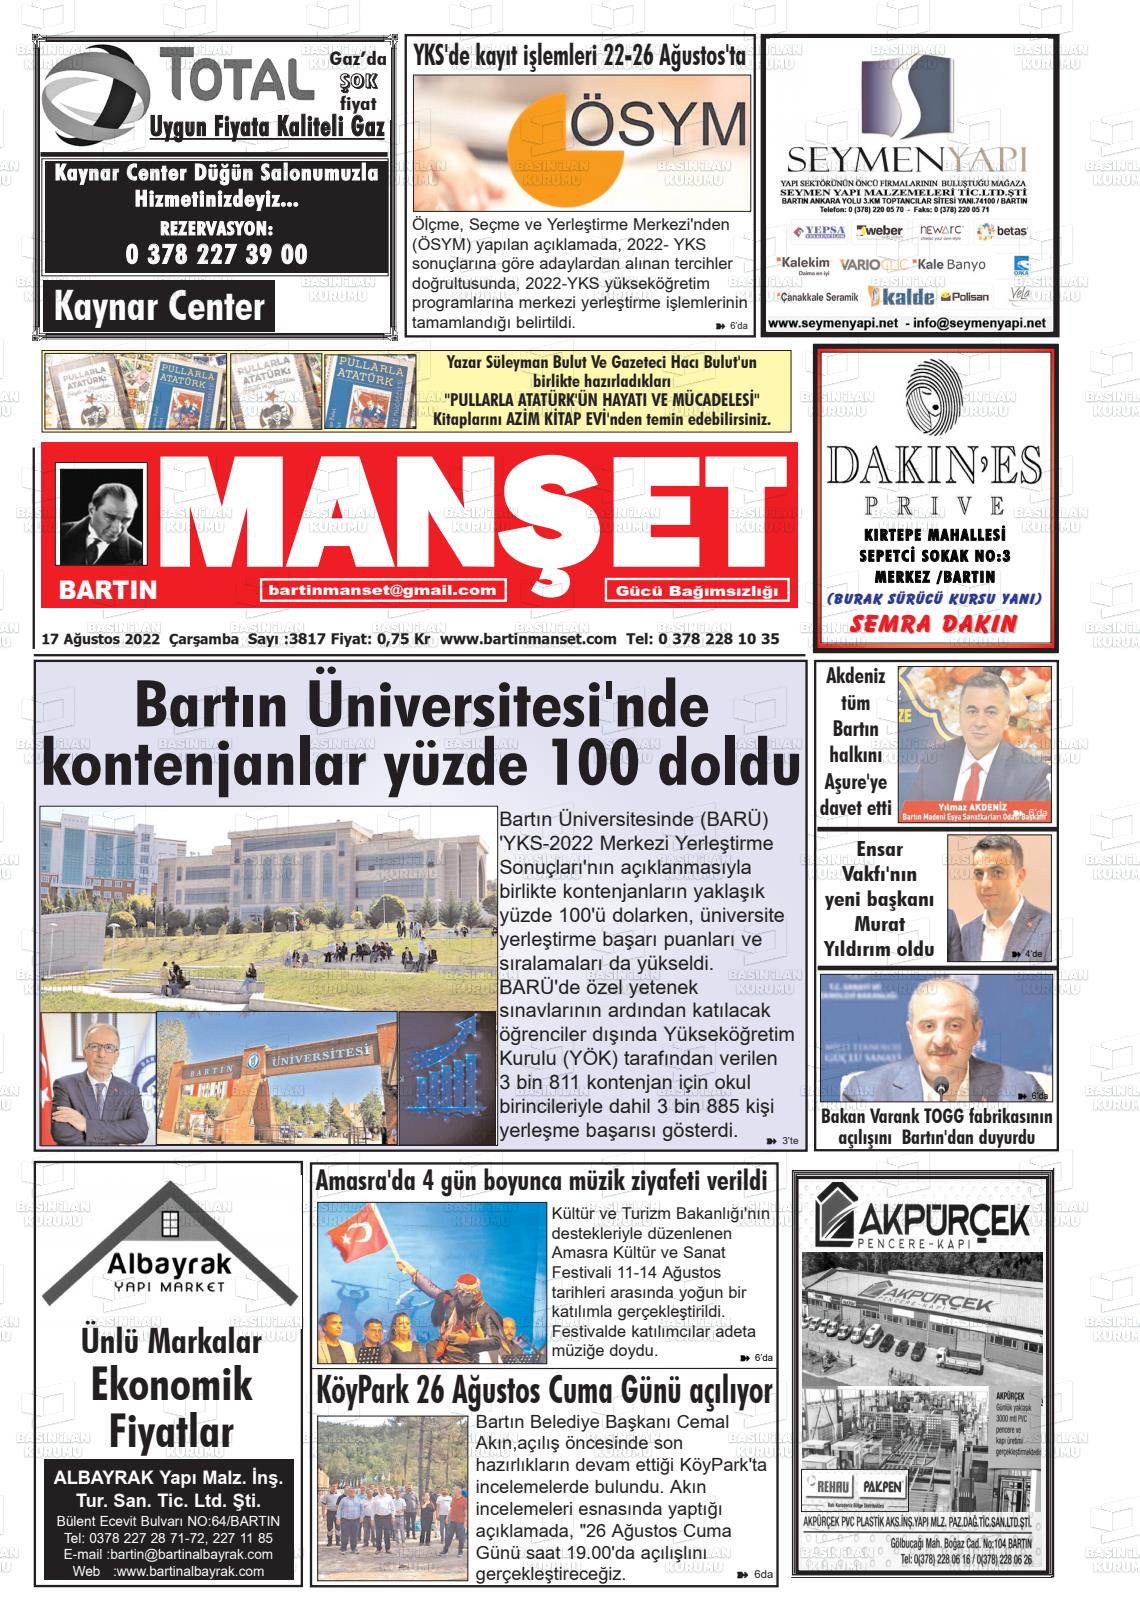 17 Ağustos 2022 Bartın Manşet Gazete Manşeti